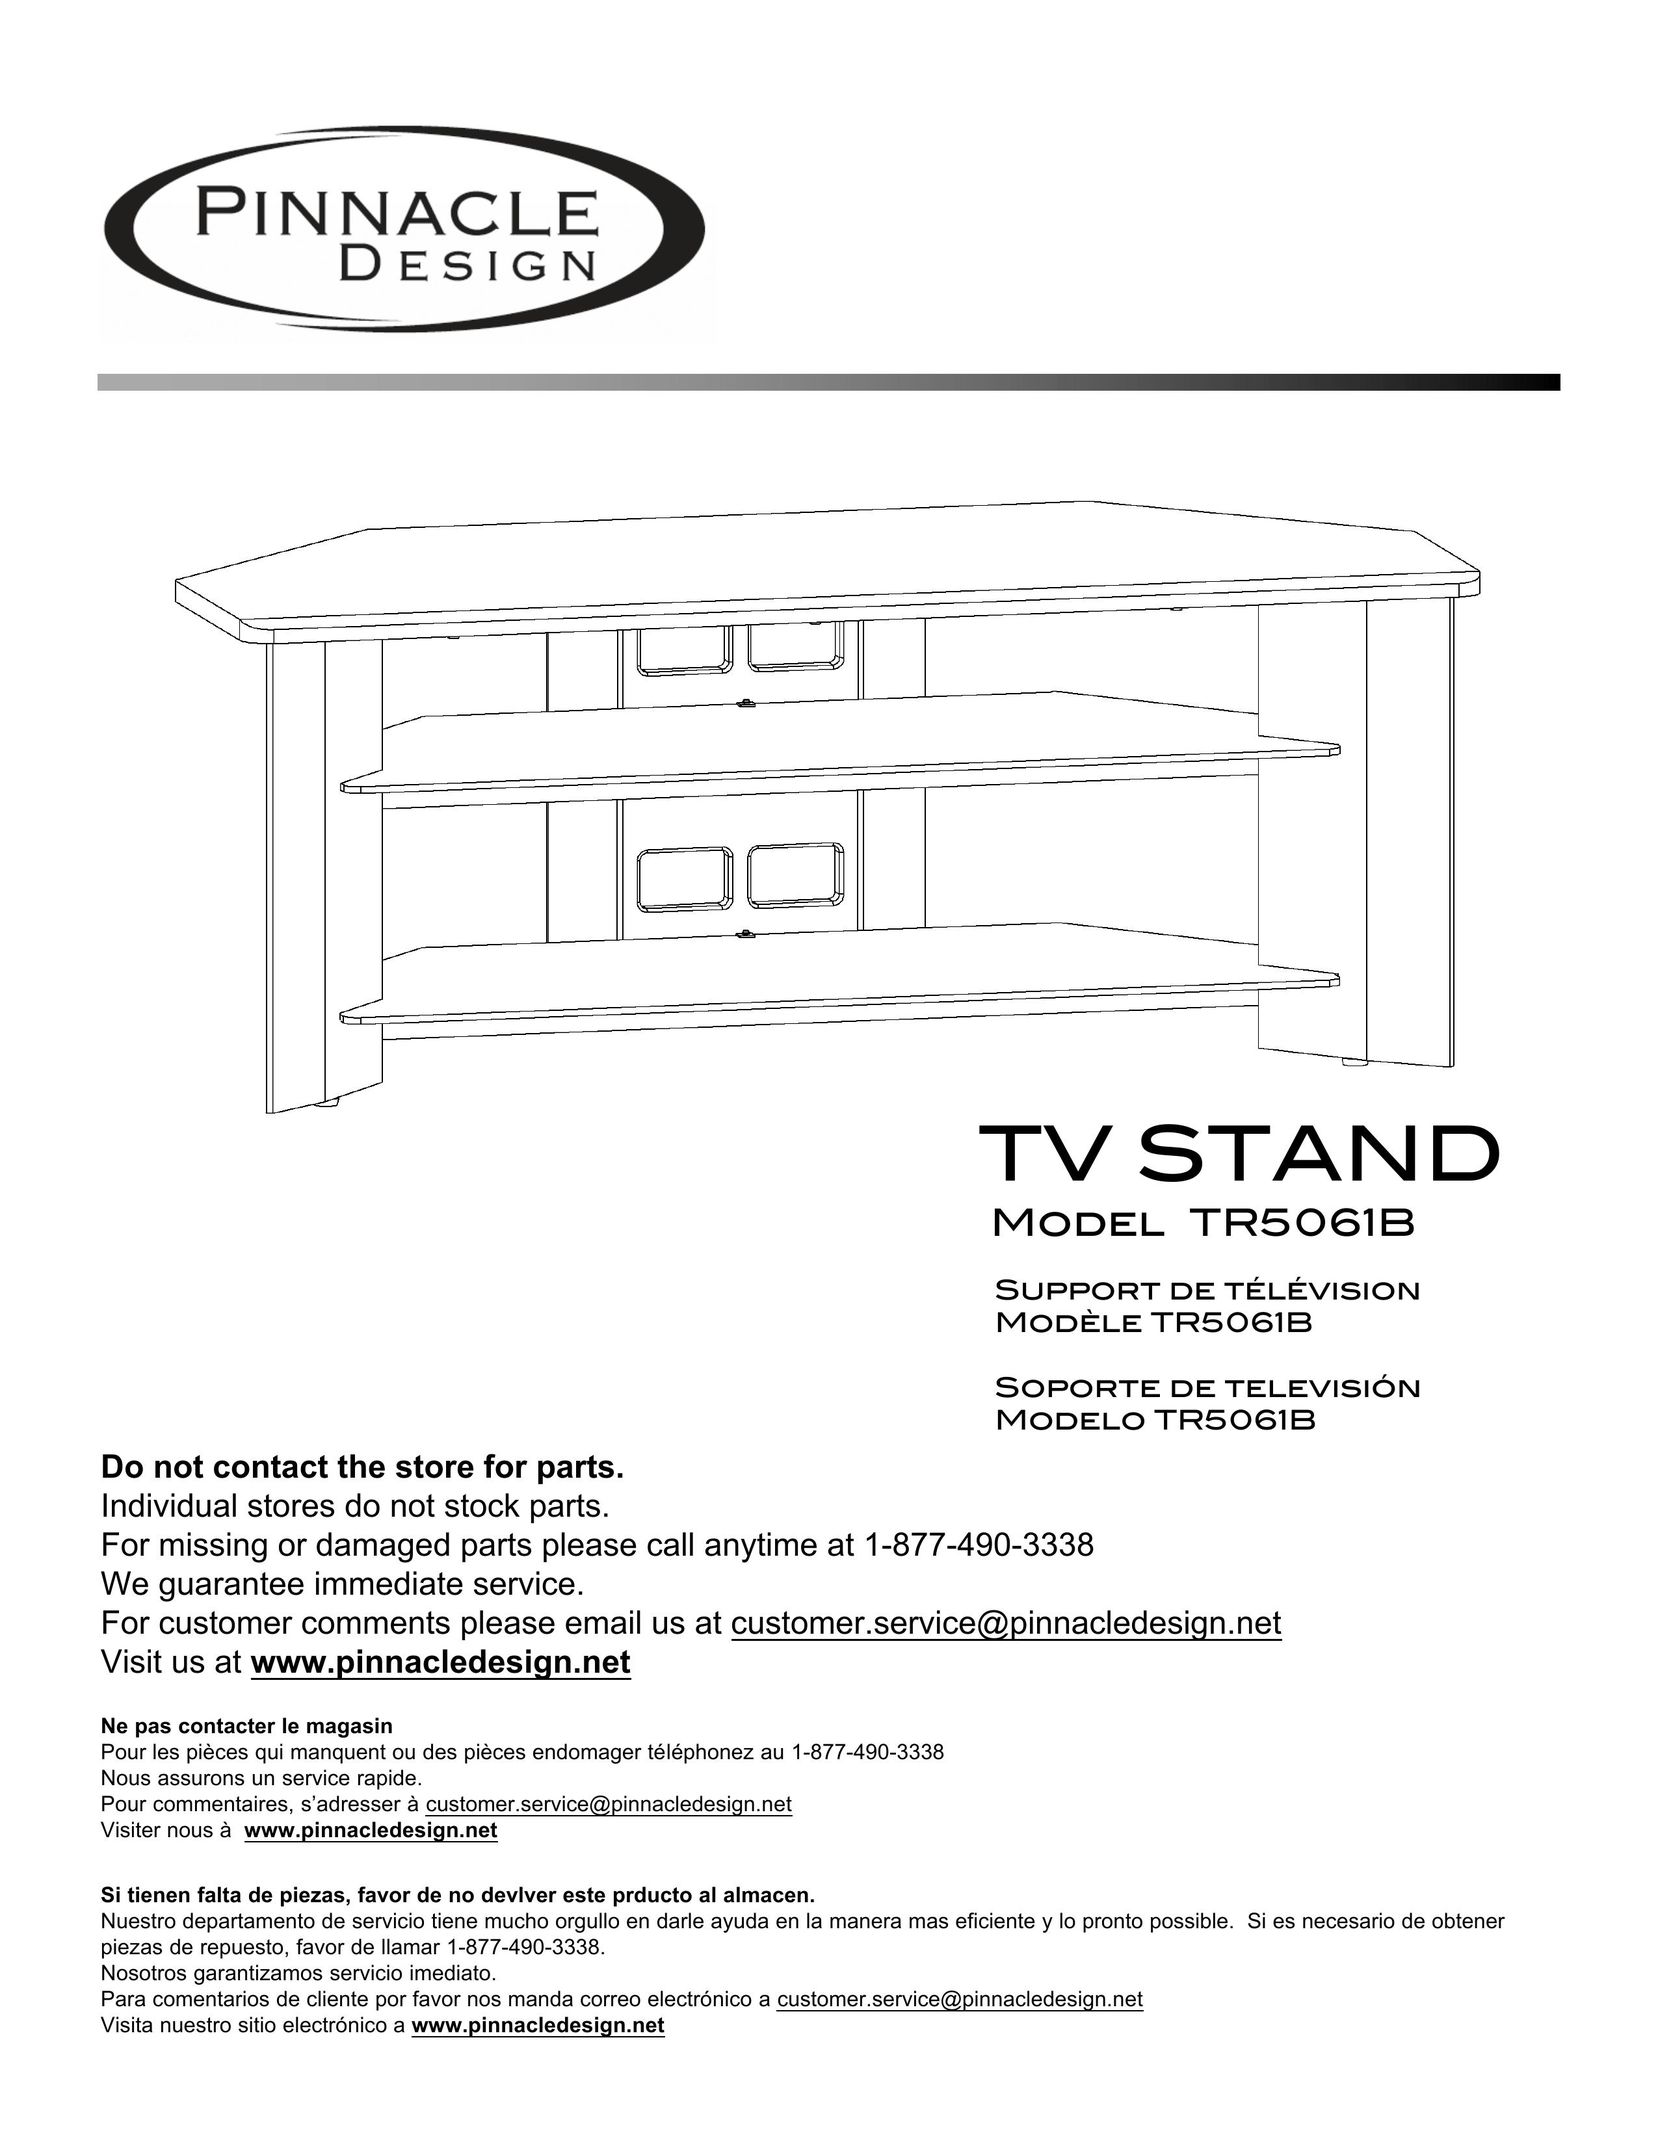 Pinnacle Design TR5061B TV Video Accessories User Manual